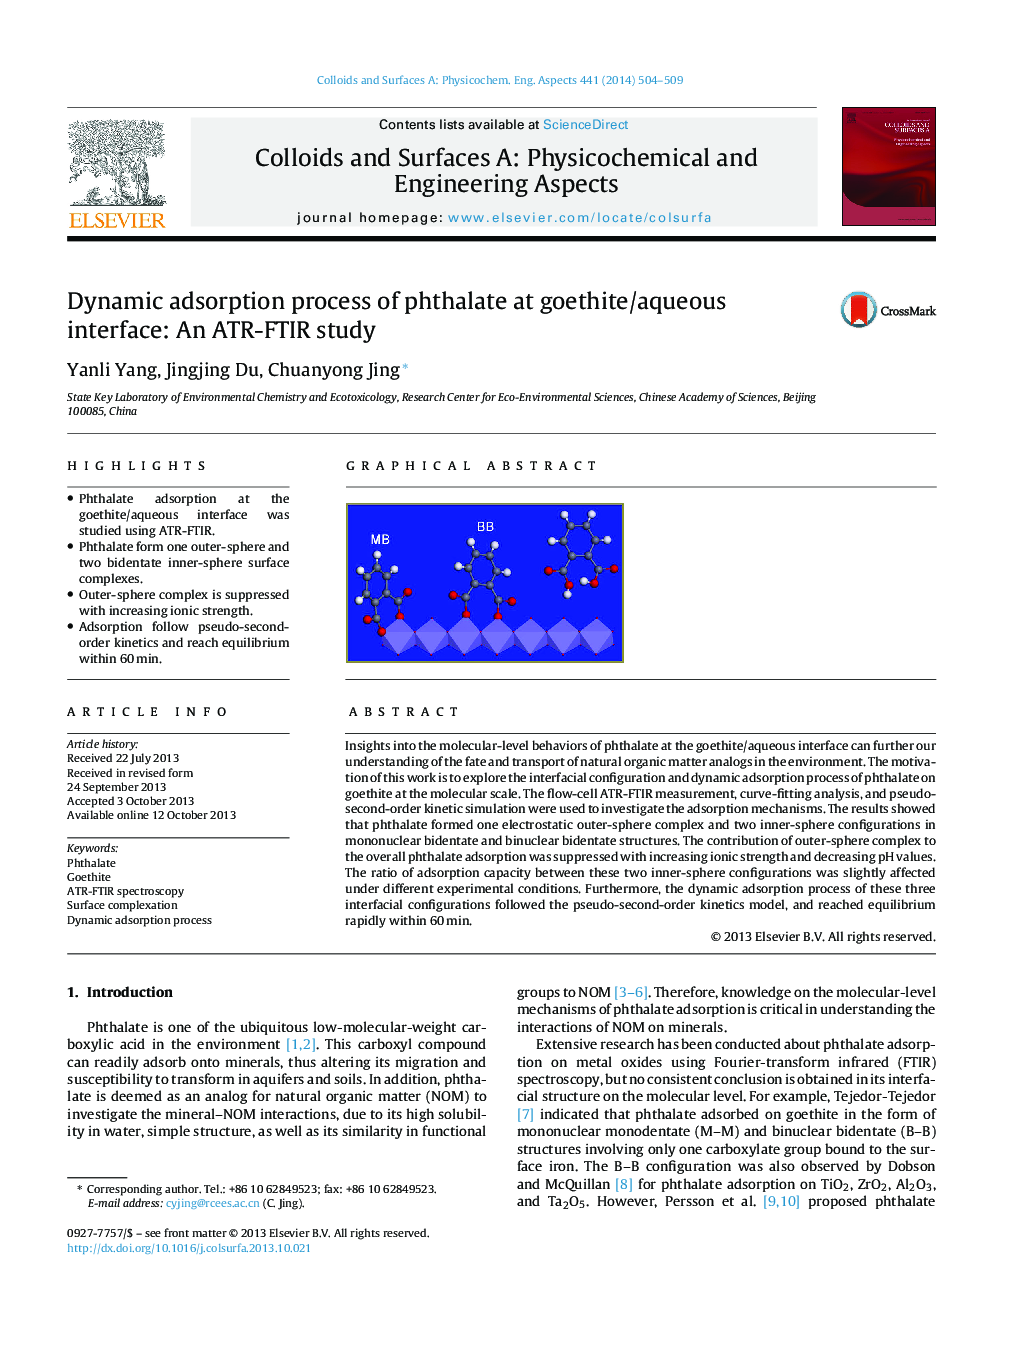 Dynamic adsorption process of phthalate at goethite/aqueous interface: An ATR-FTIR study